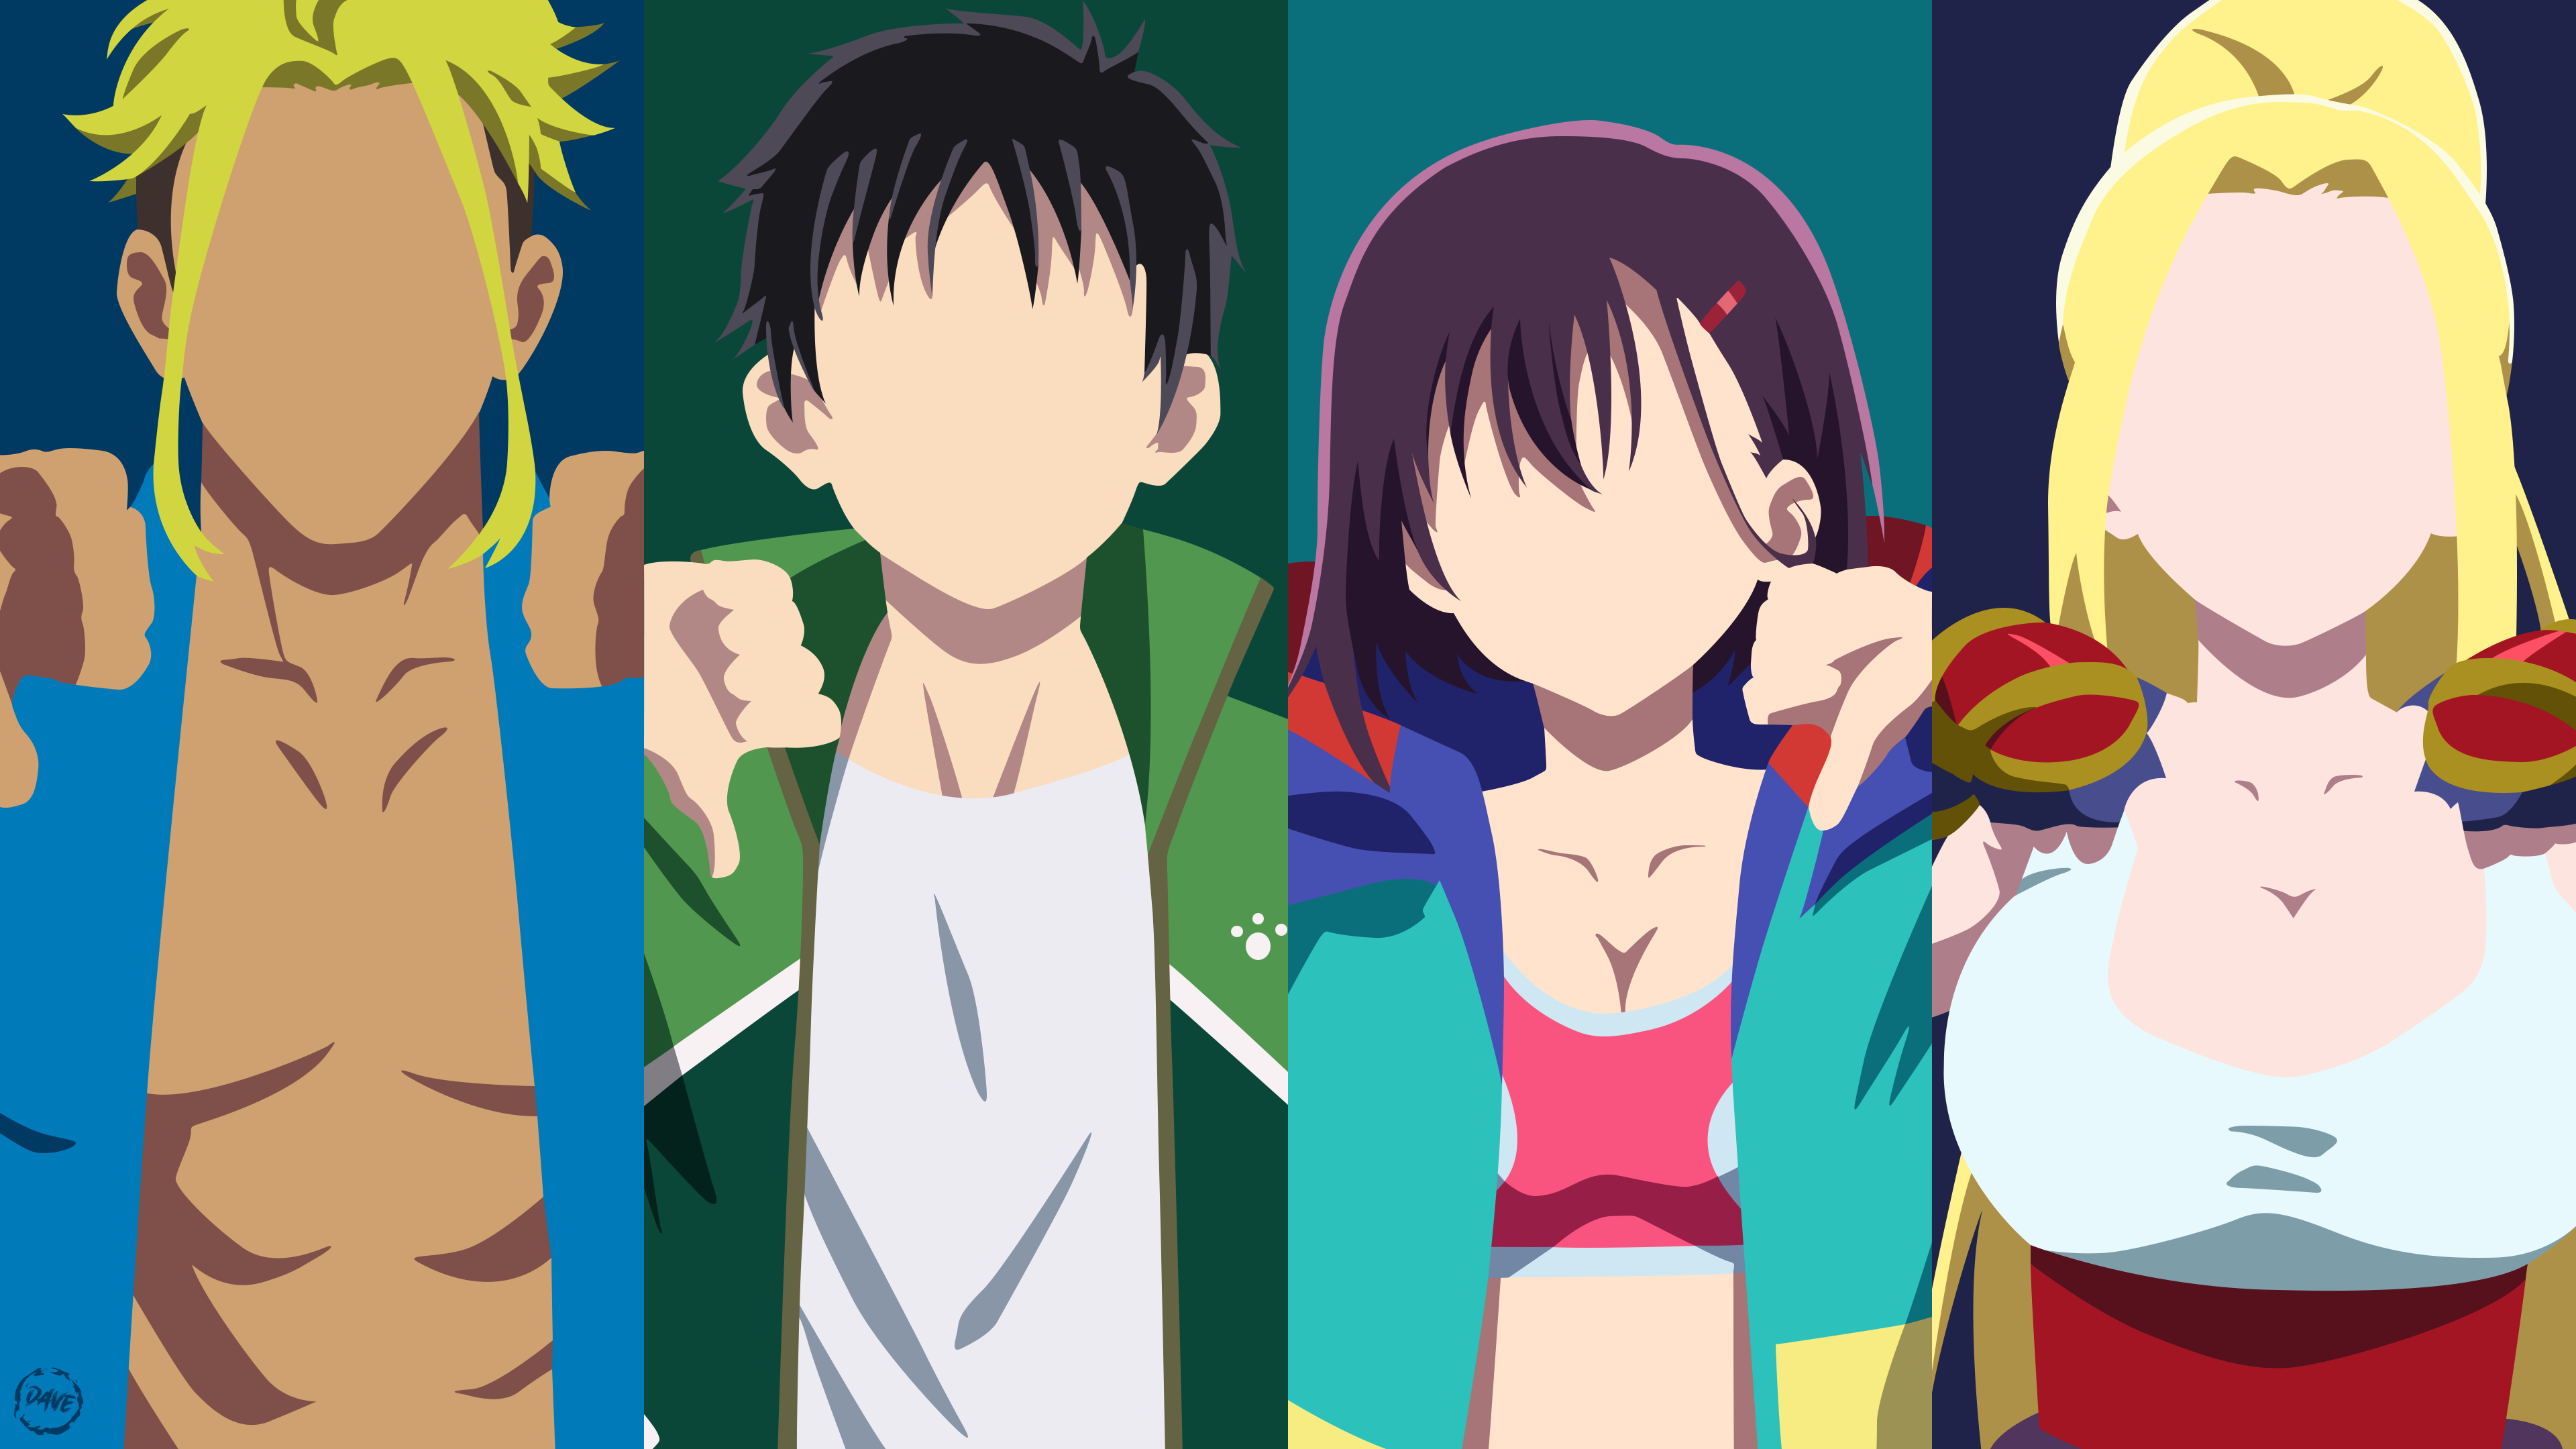 Jujutsu Kaisen  Anime Characters 4K wallpaper download